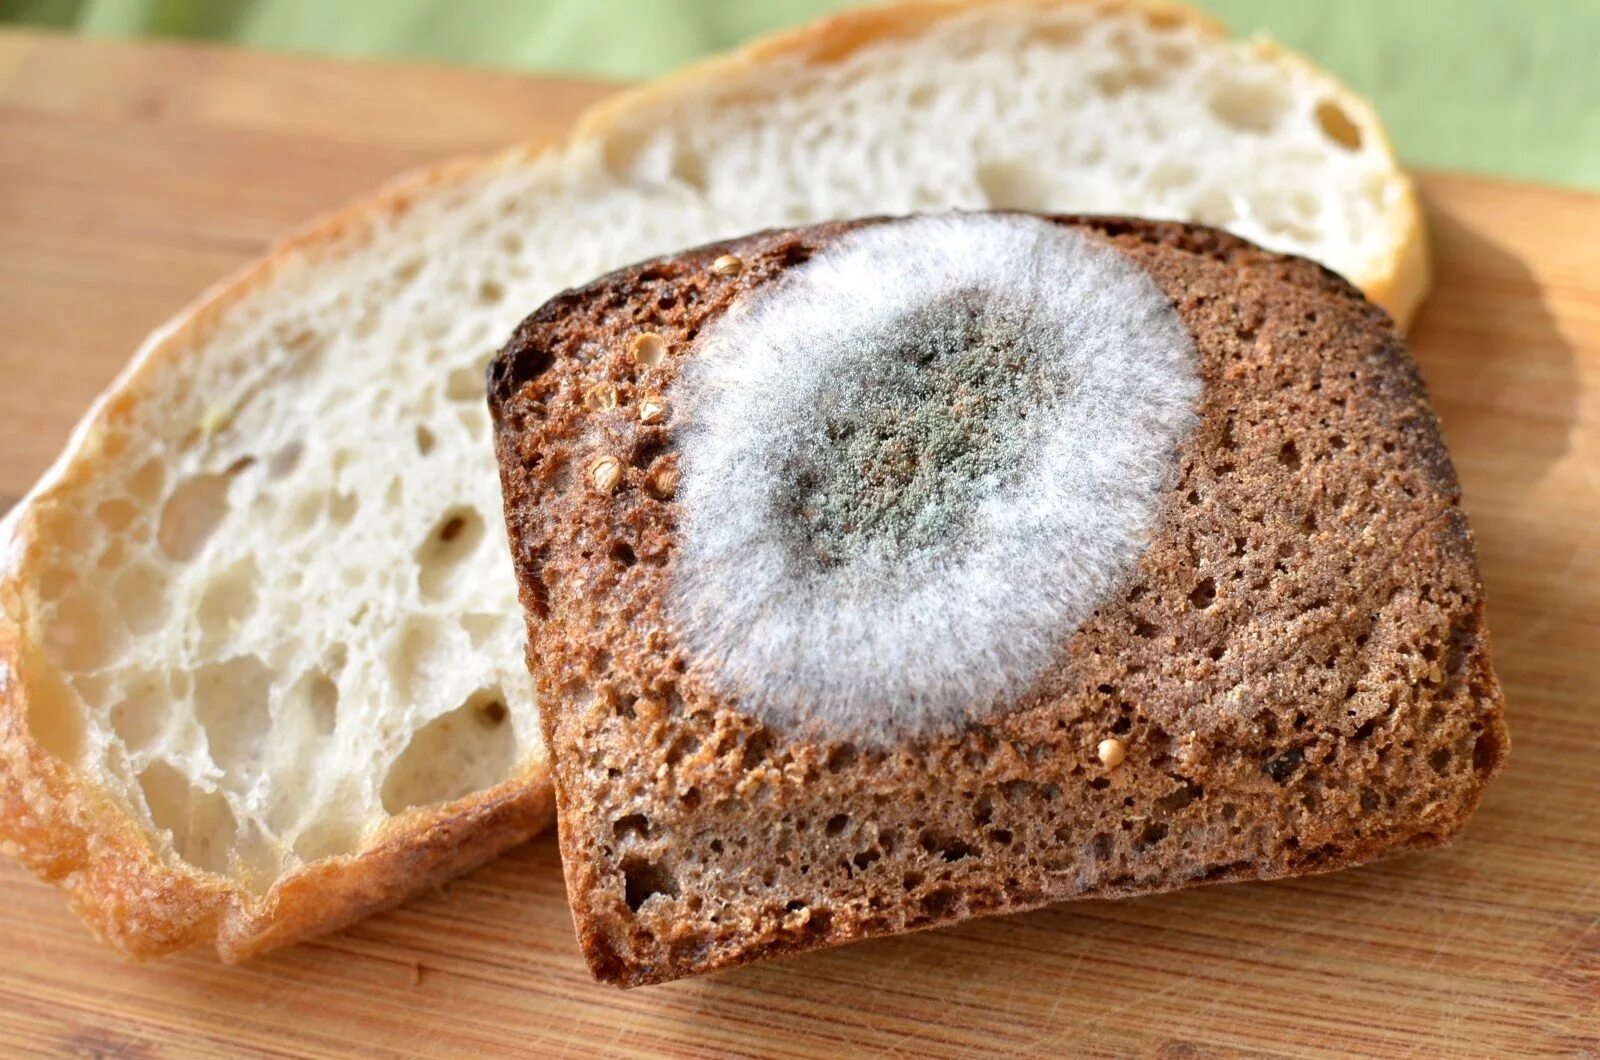 Хлебная плесень мукор. Белая плесень мукор на хлебе. Гриб пеницилл на хлебе. Гриб мукор на хлебе. Ела хлеб с плесенью